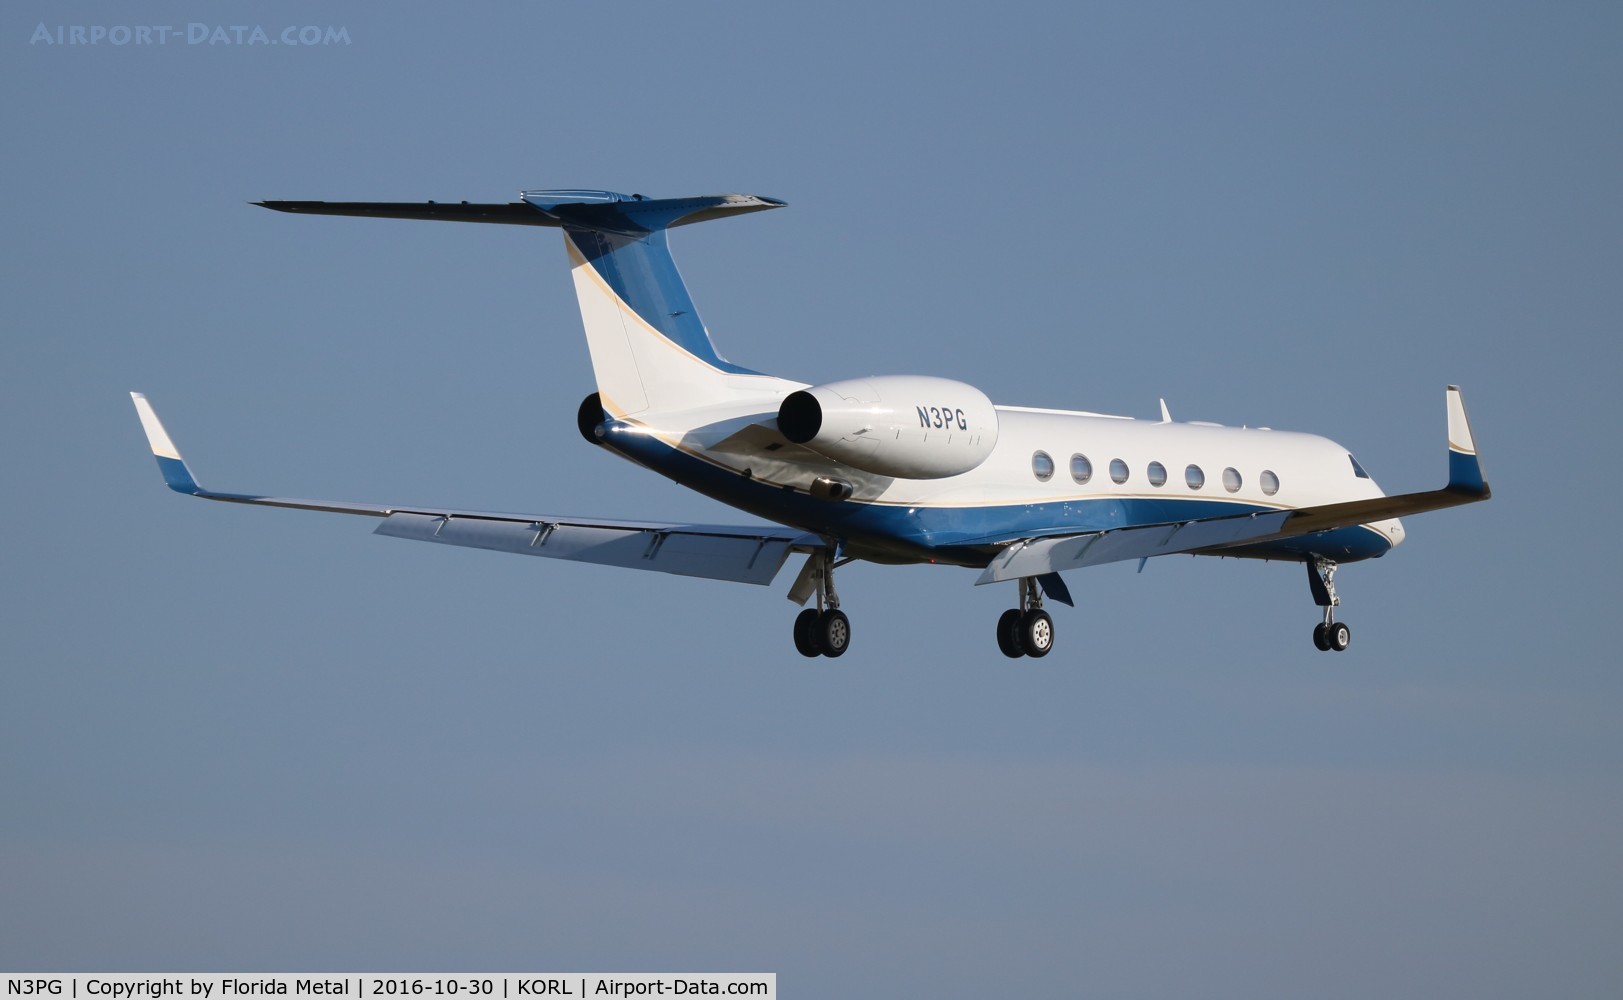 N3PG, 2005 Gulfstream Aerospace GV-SP (G550) C/N 5091, NBAA 2016 zx